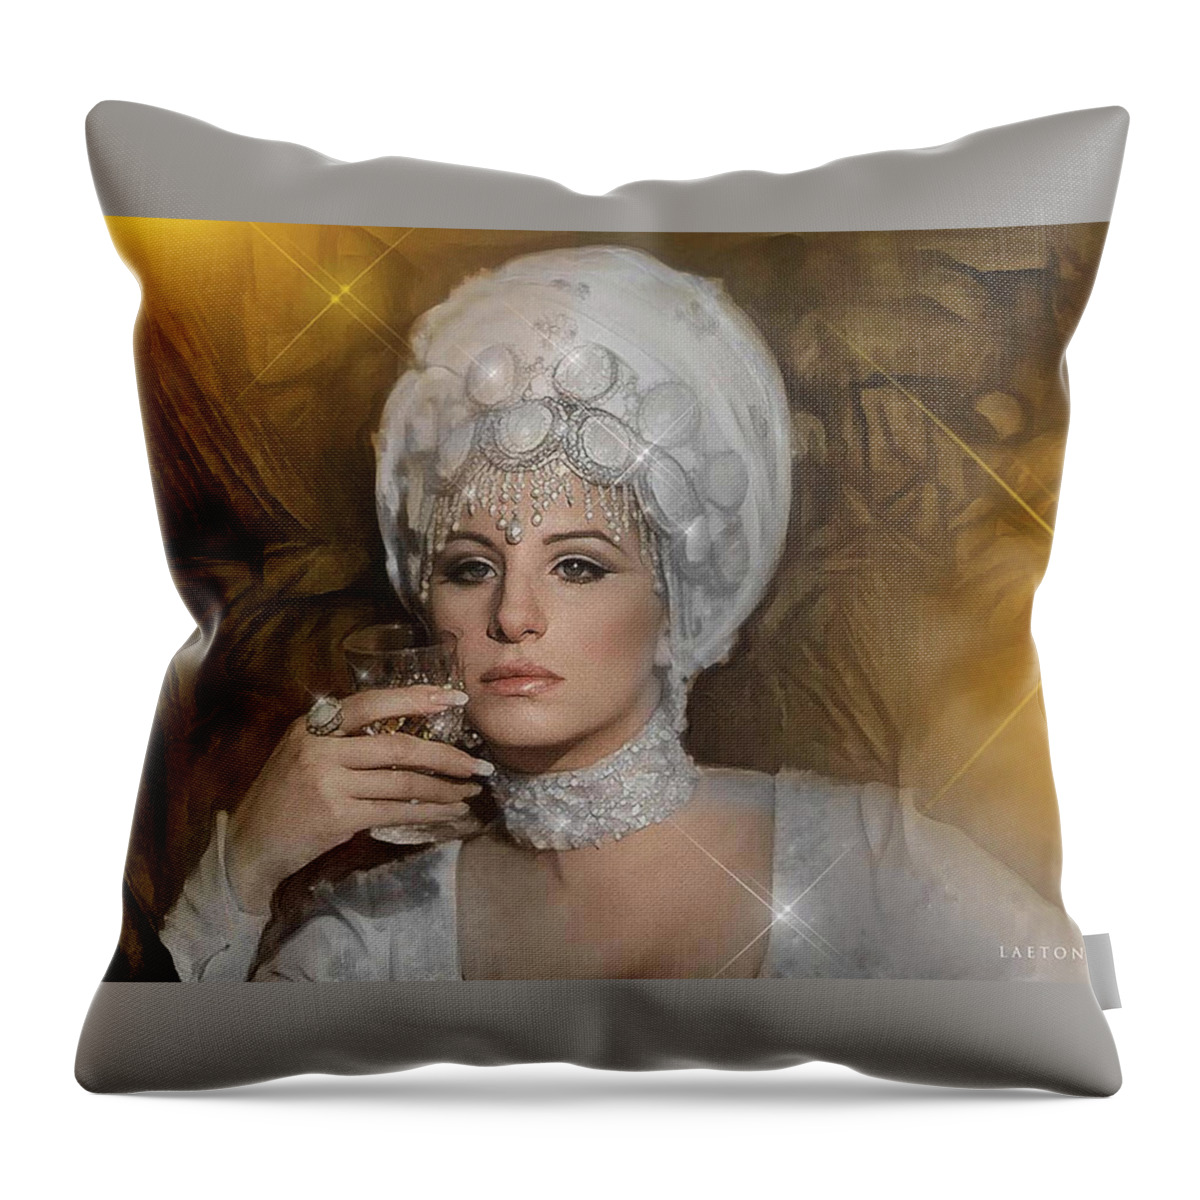  Throw Pillow featuring the digital art Barbra Streisand 3 by Richard Laeton